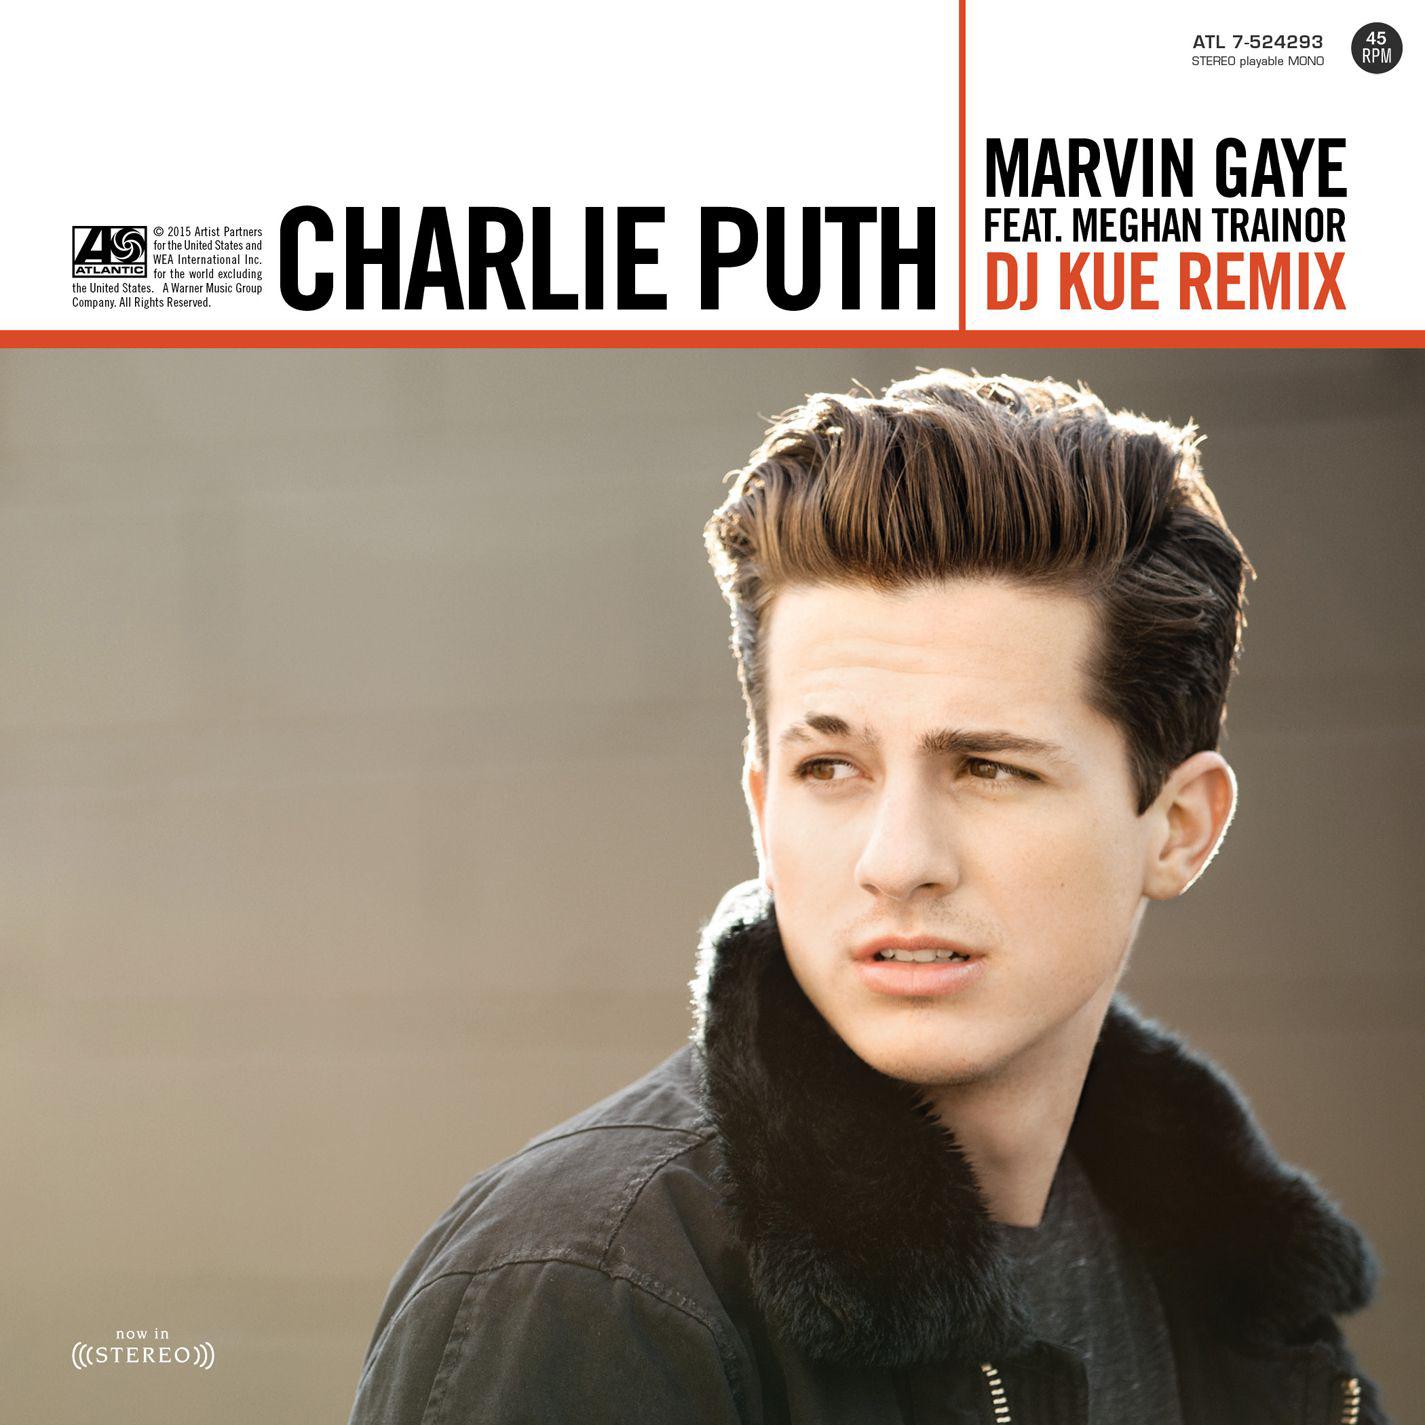 Charlie Puth - Marvin Gaye (feat. Meghan Trainor) [DJ Kue Remix]